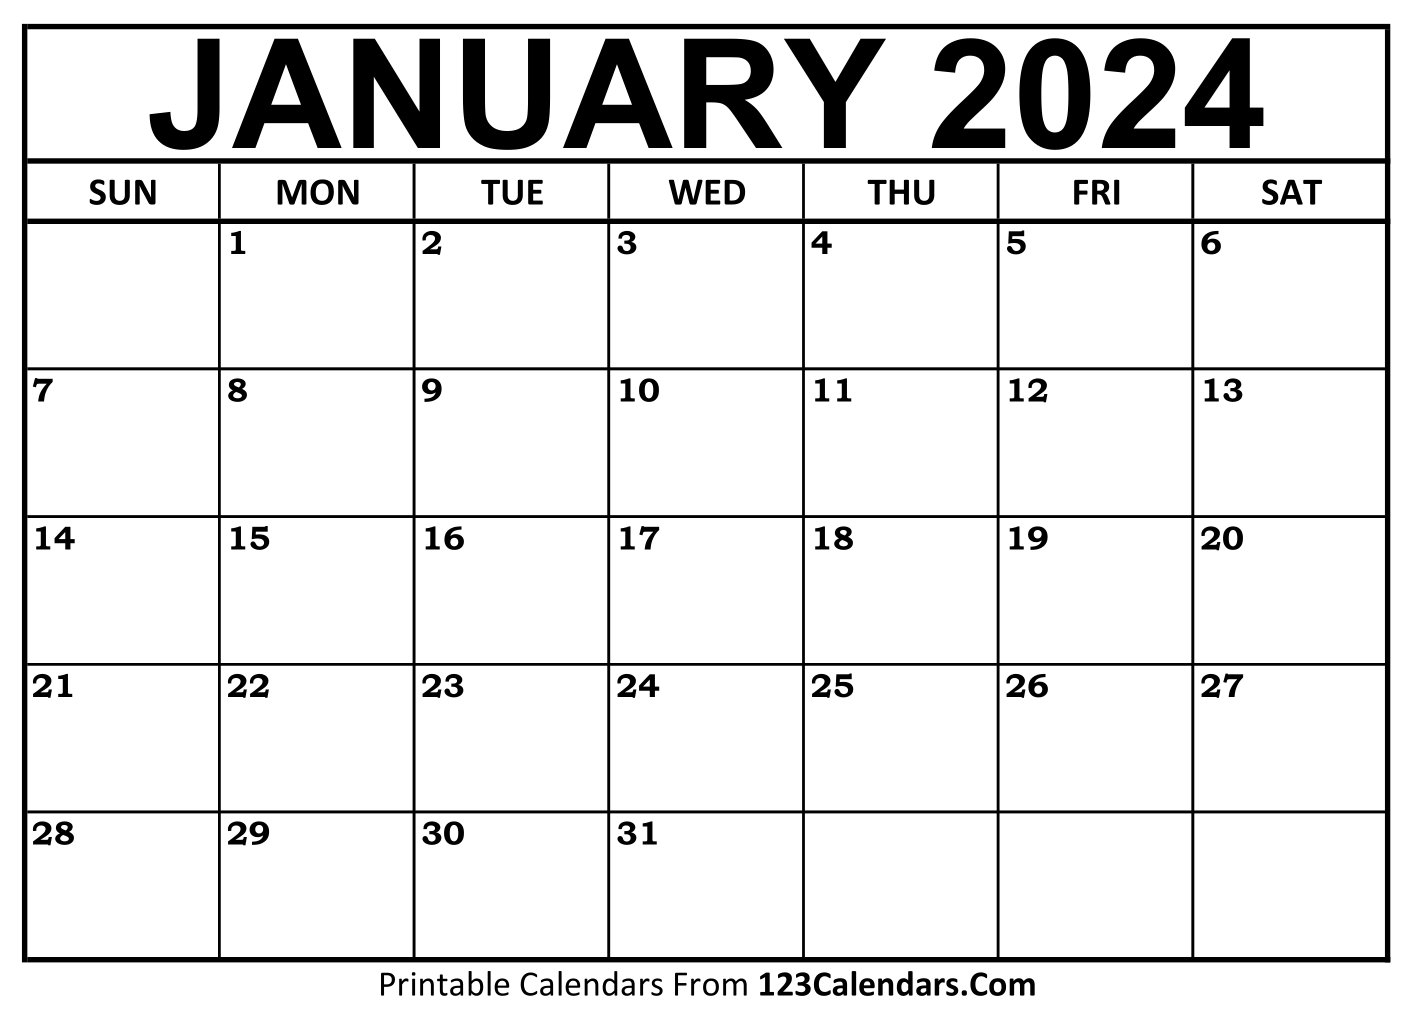 Printable January 2024 Calendar Templates - 123Calendars for Printable Calendar Jan 2024